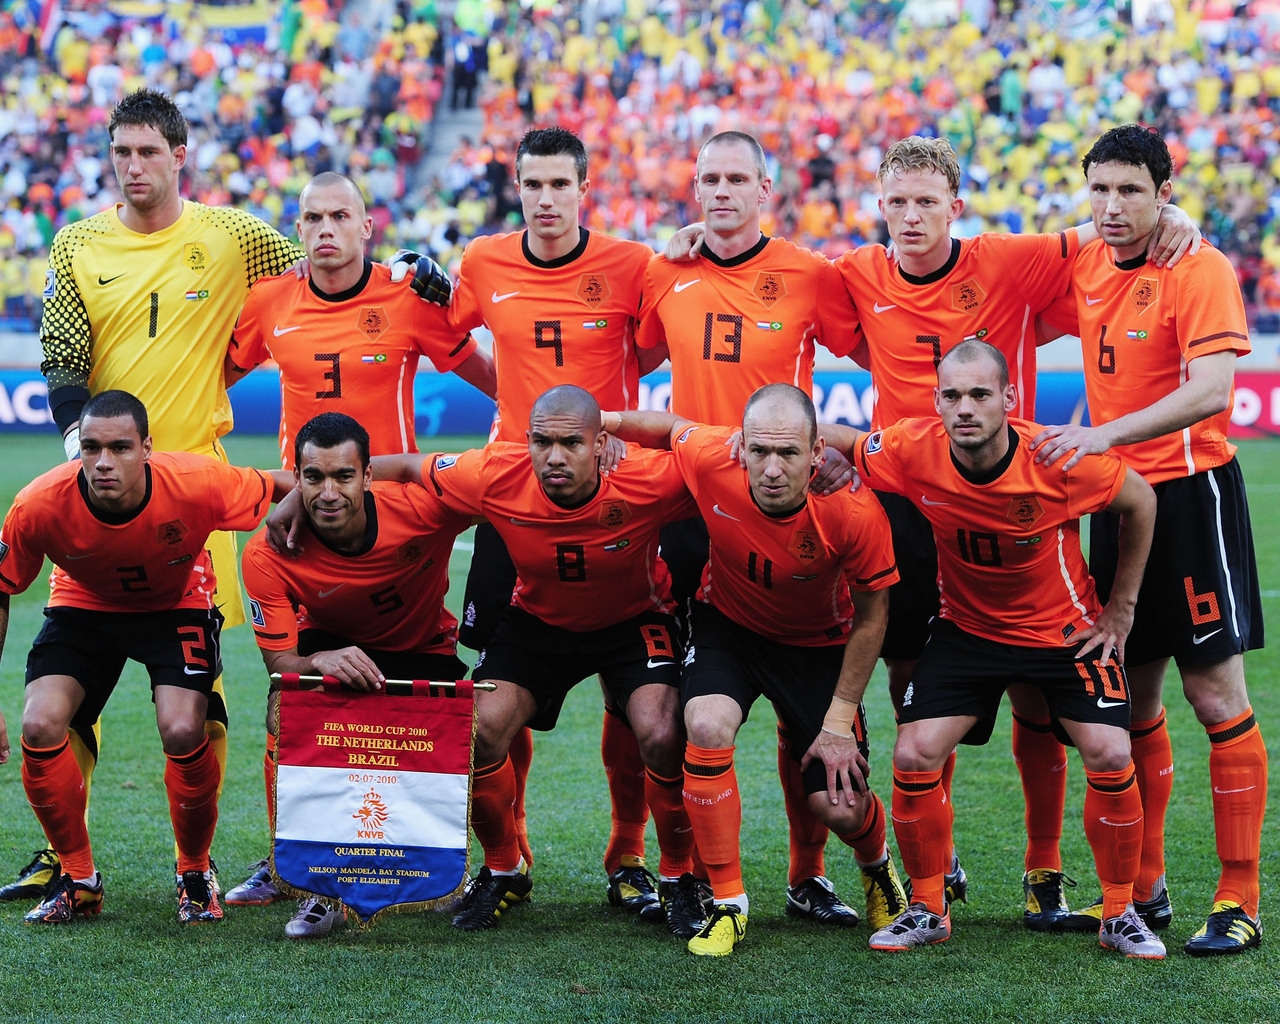 Football Holland Team for 1280 x 1024 resolution